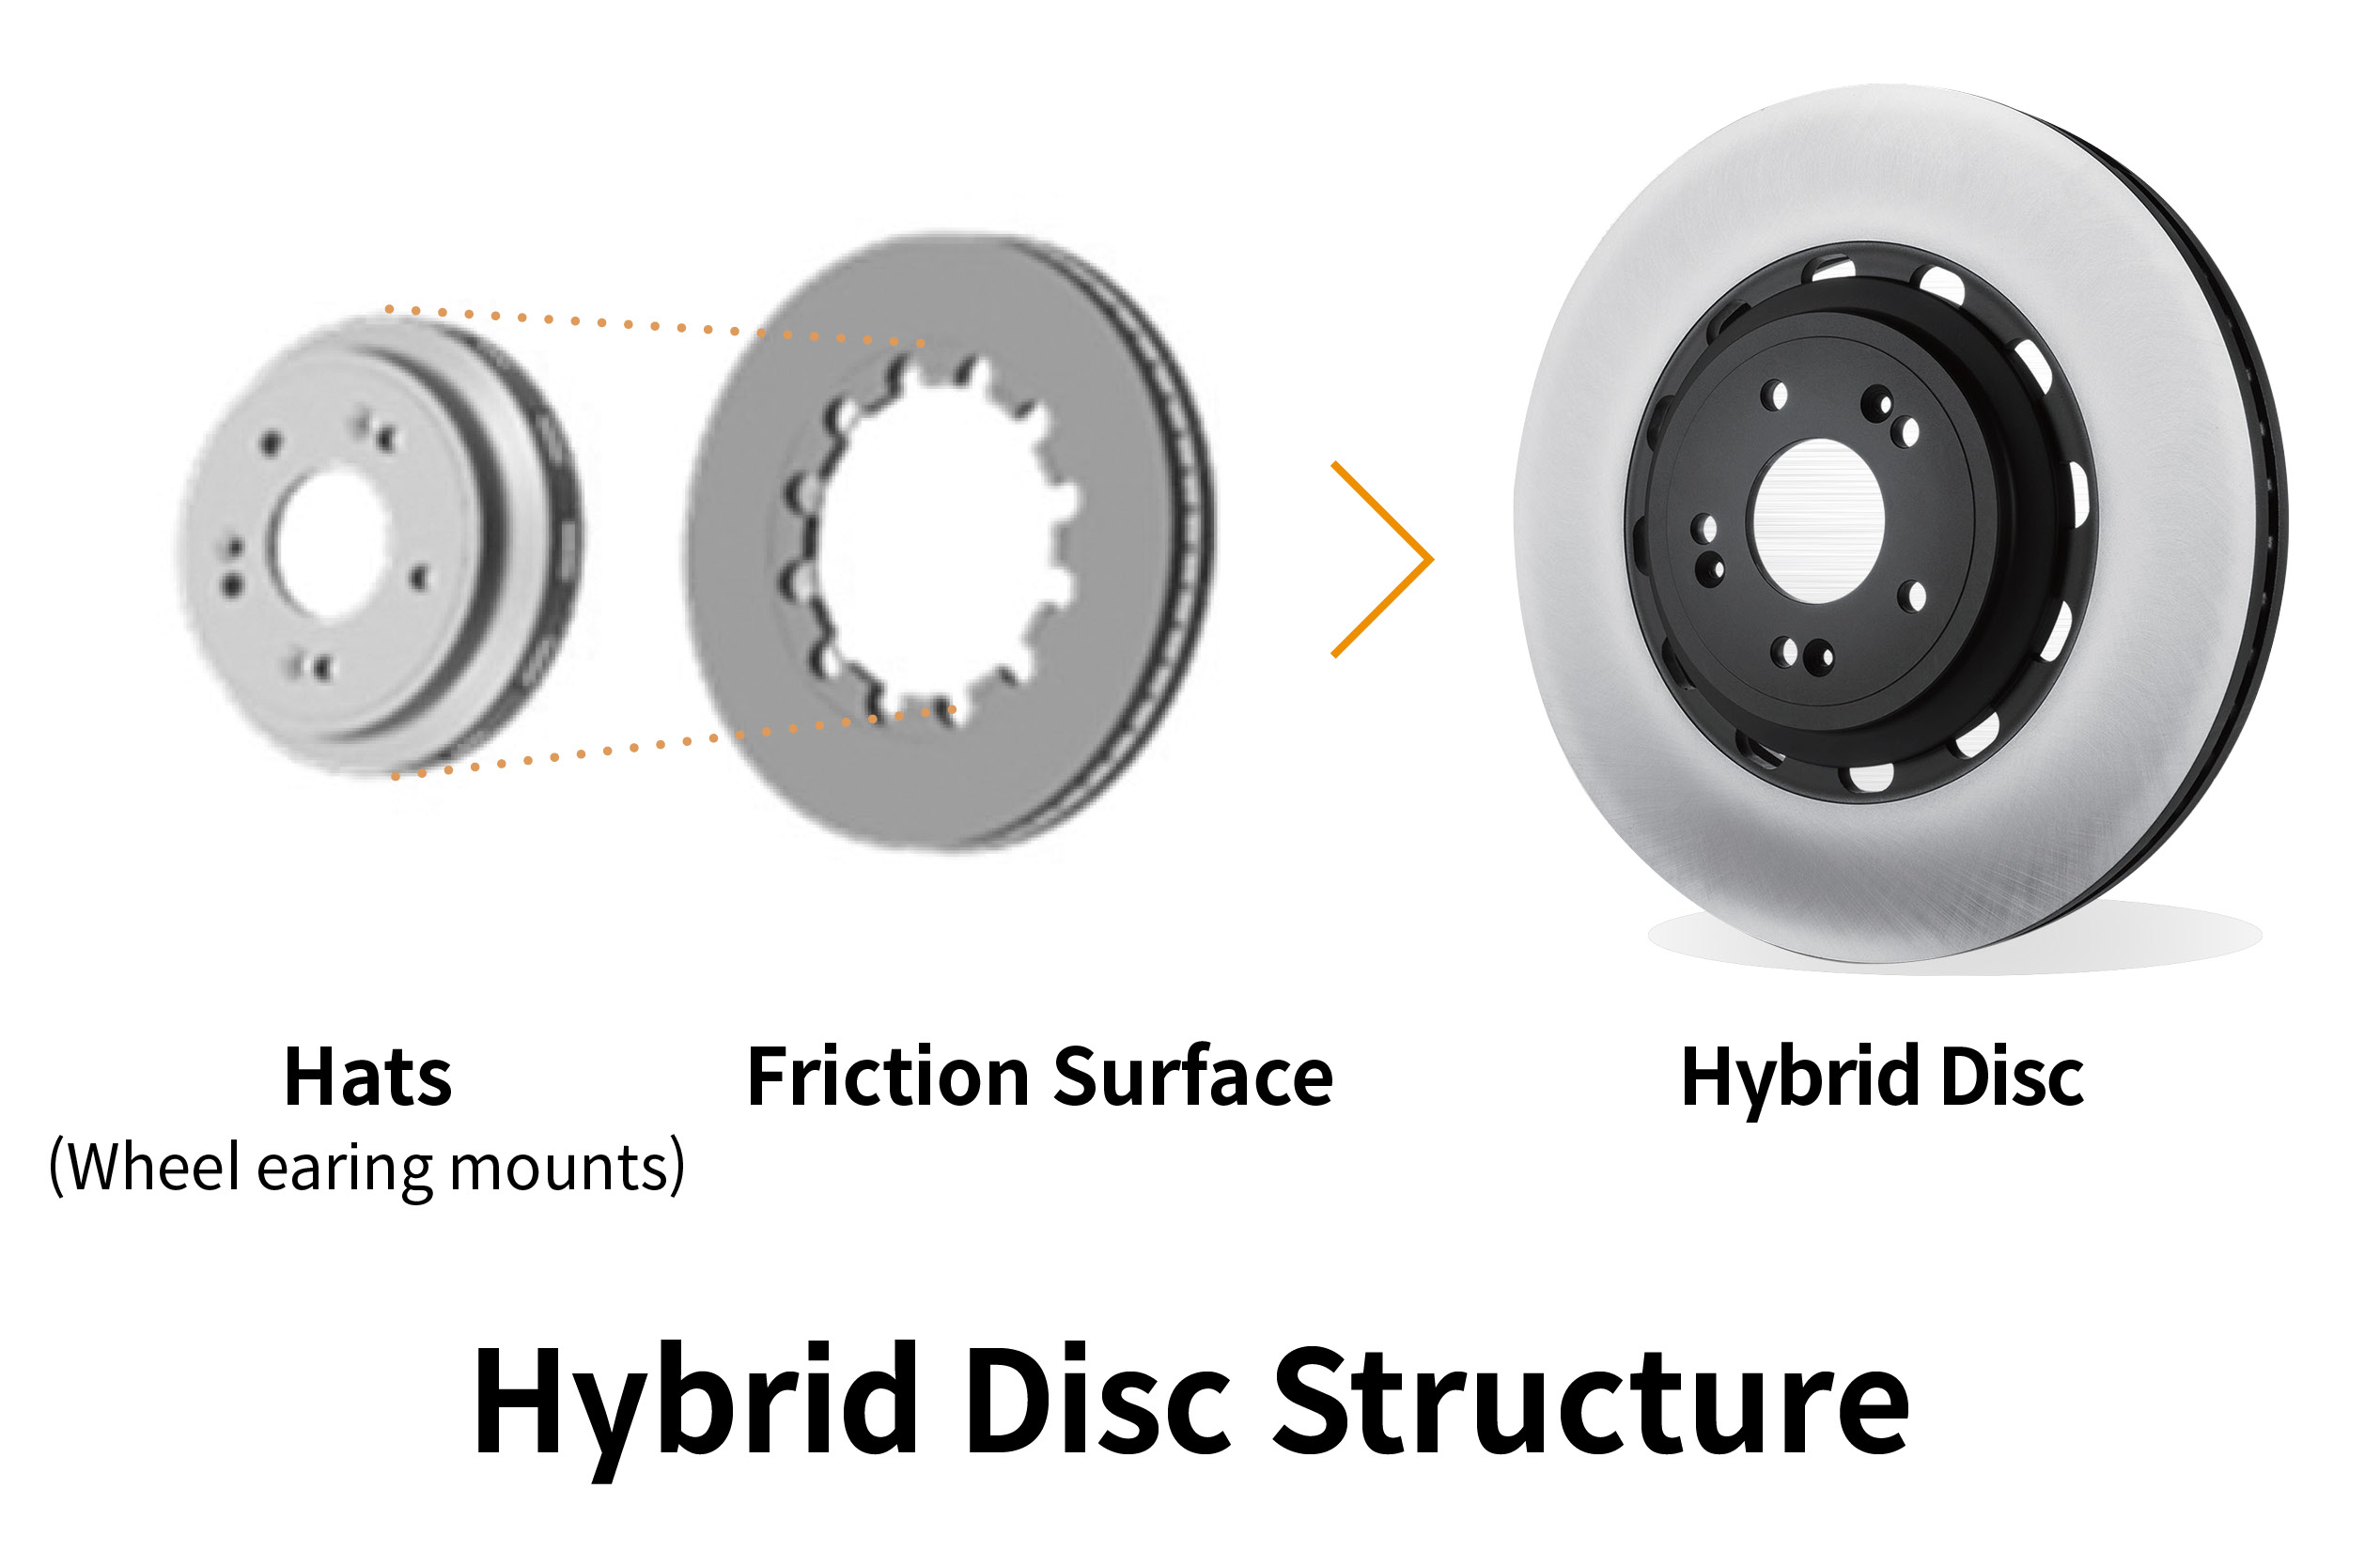 Infographic explaining hybrid disk structure